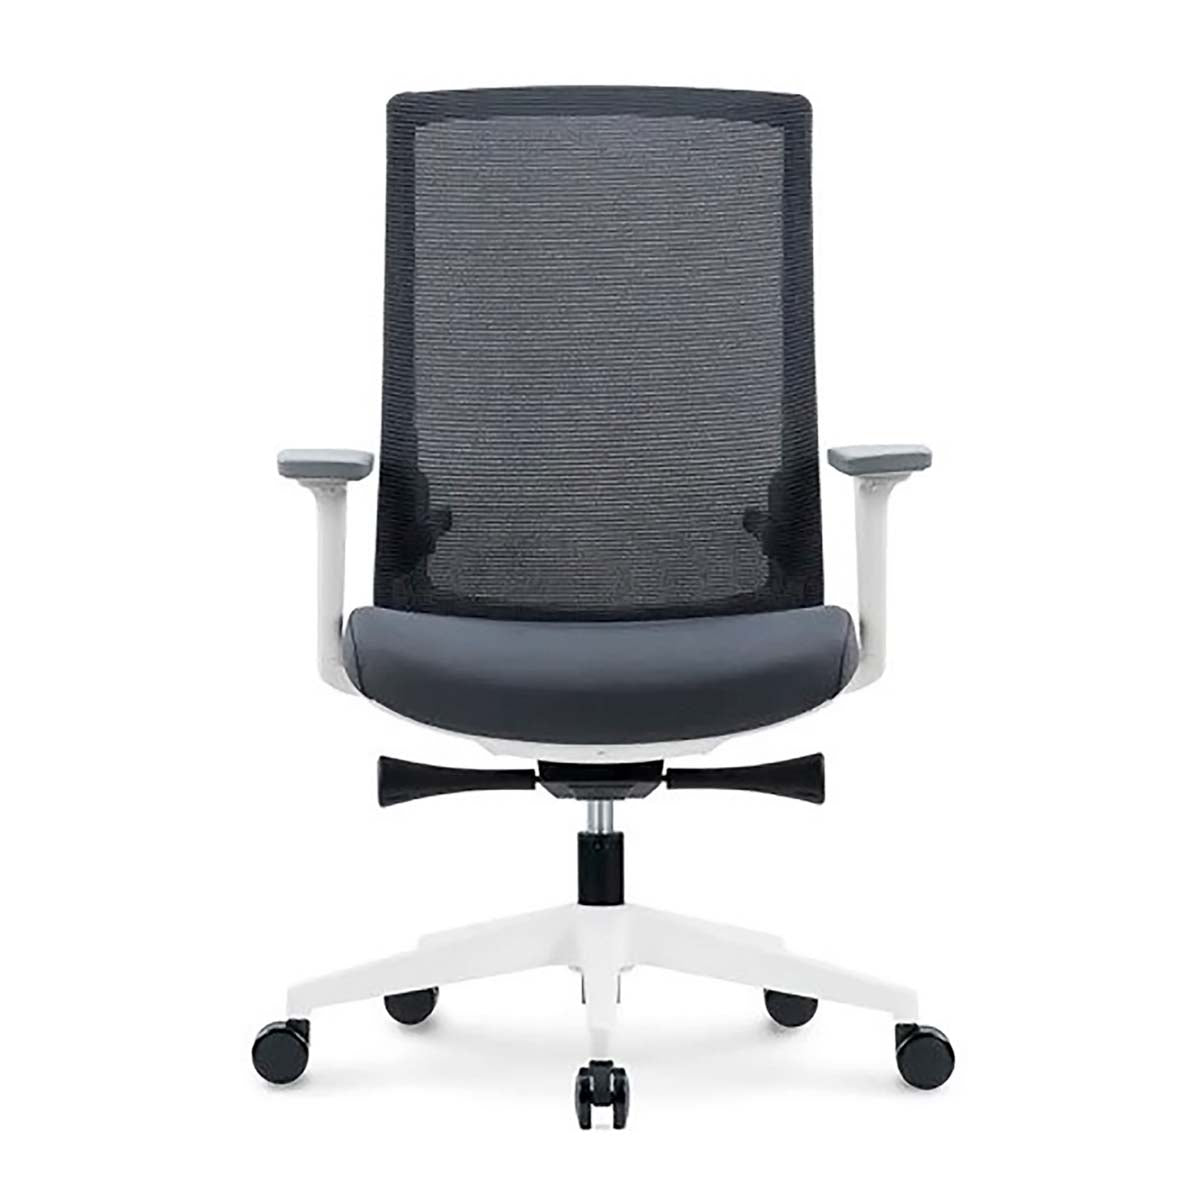 Shrike Ergonomic Chair - Black - Delivered in 3-5 Business Days